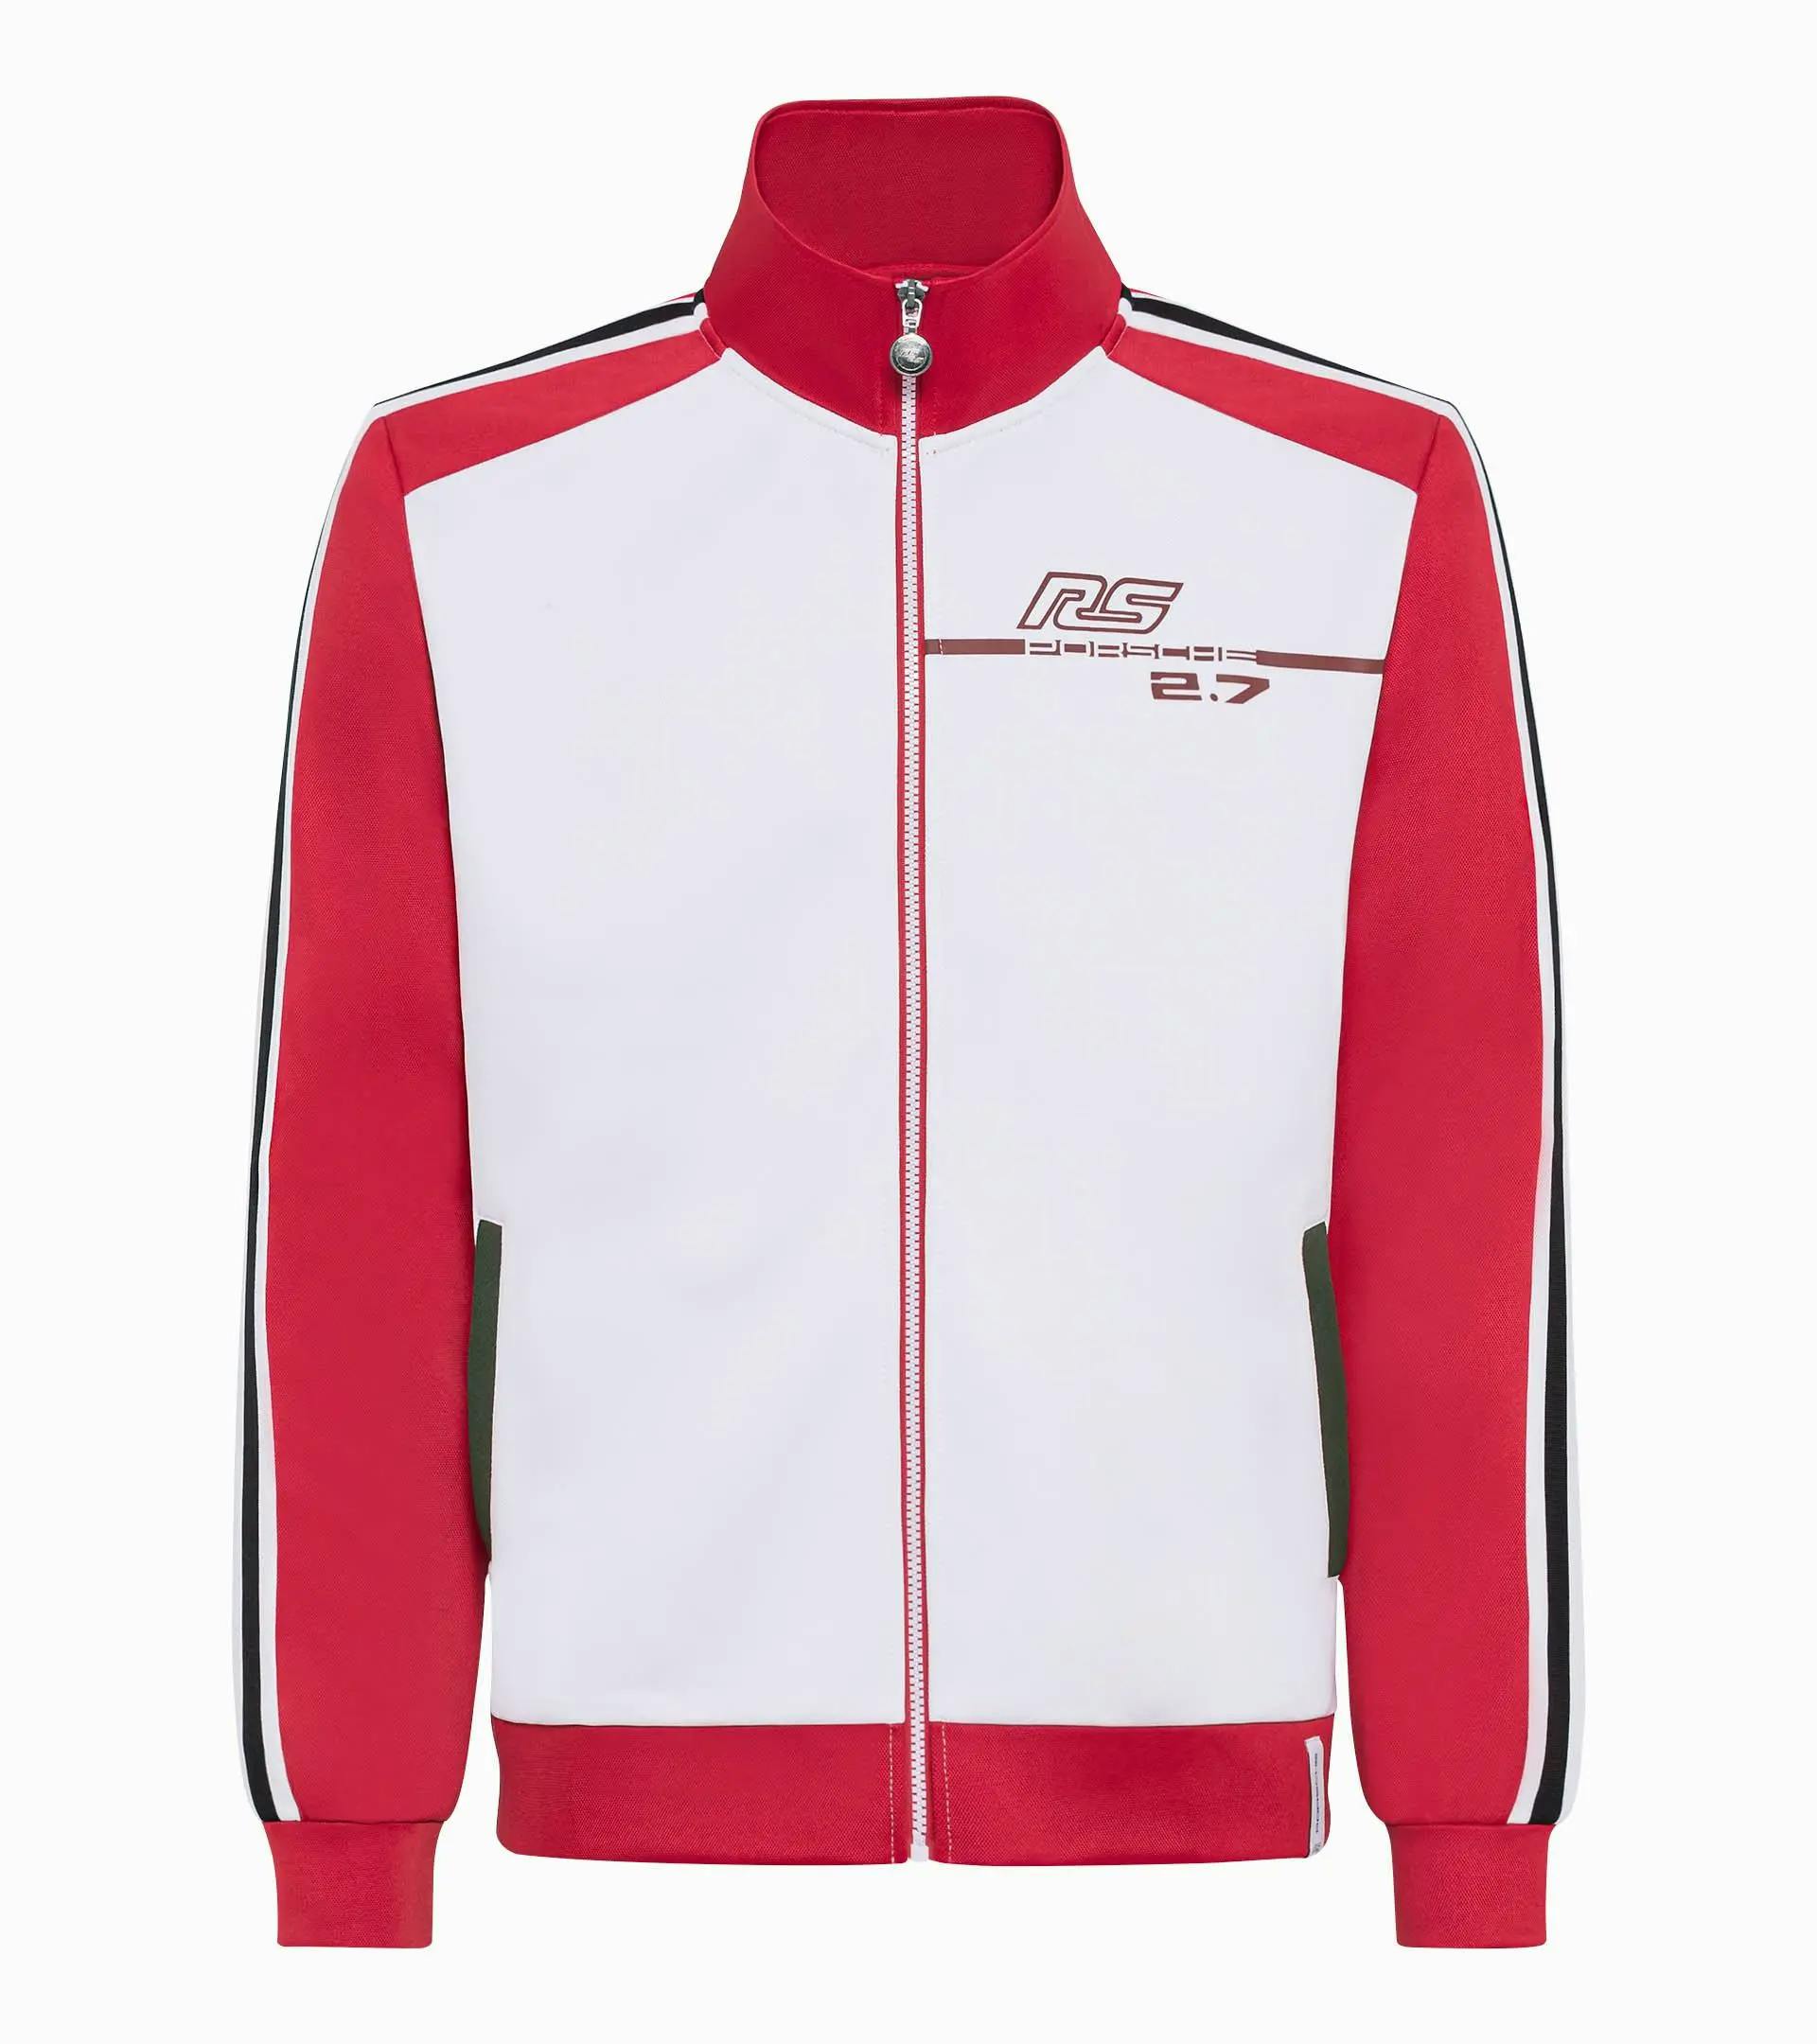 Men's training jacket – RS 2.7 1